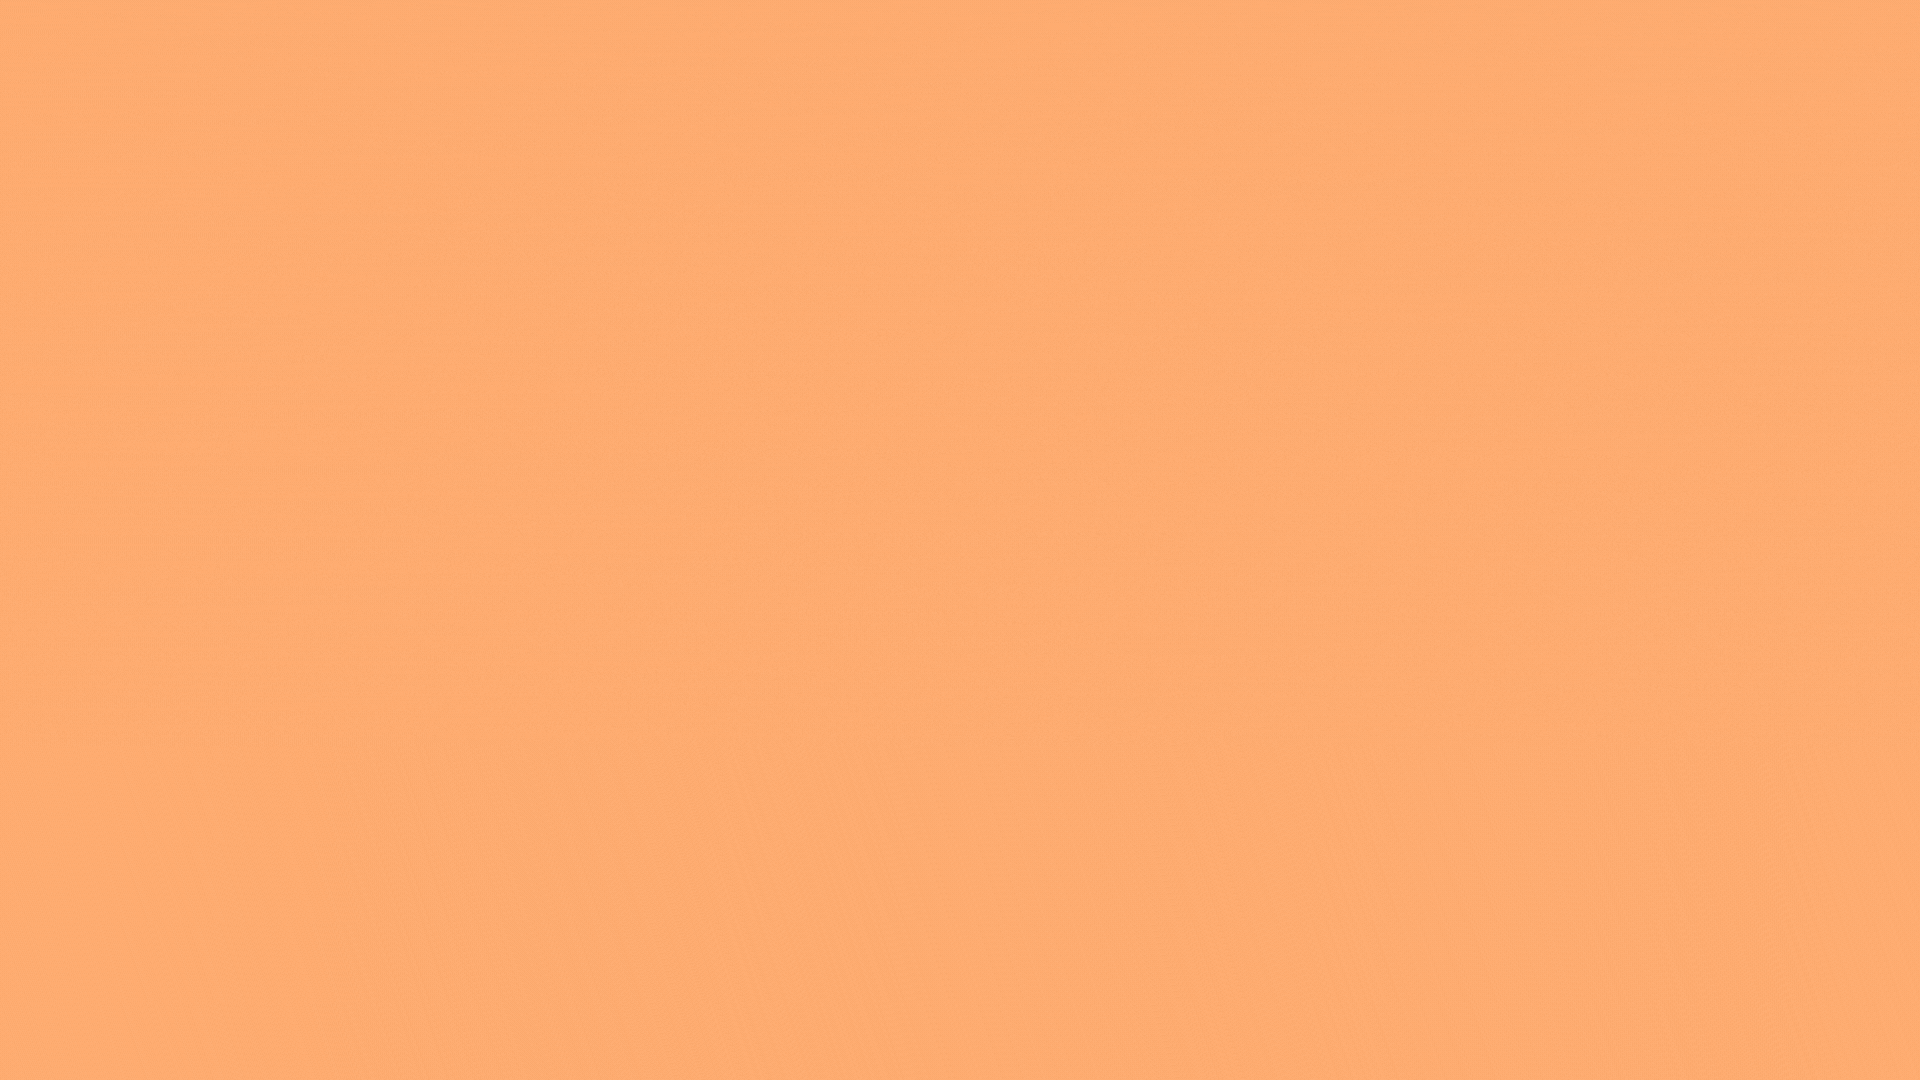 Orange 3로 데이터분석 쉽게하기(3기)